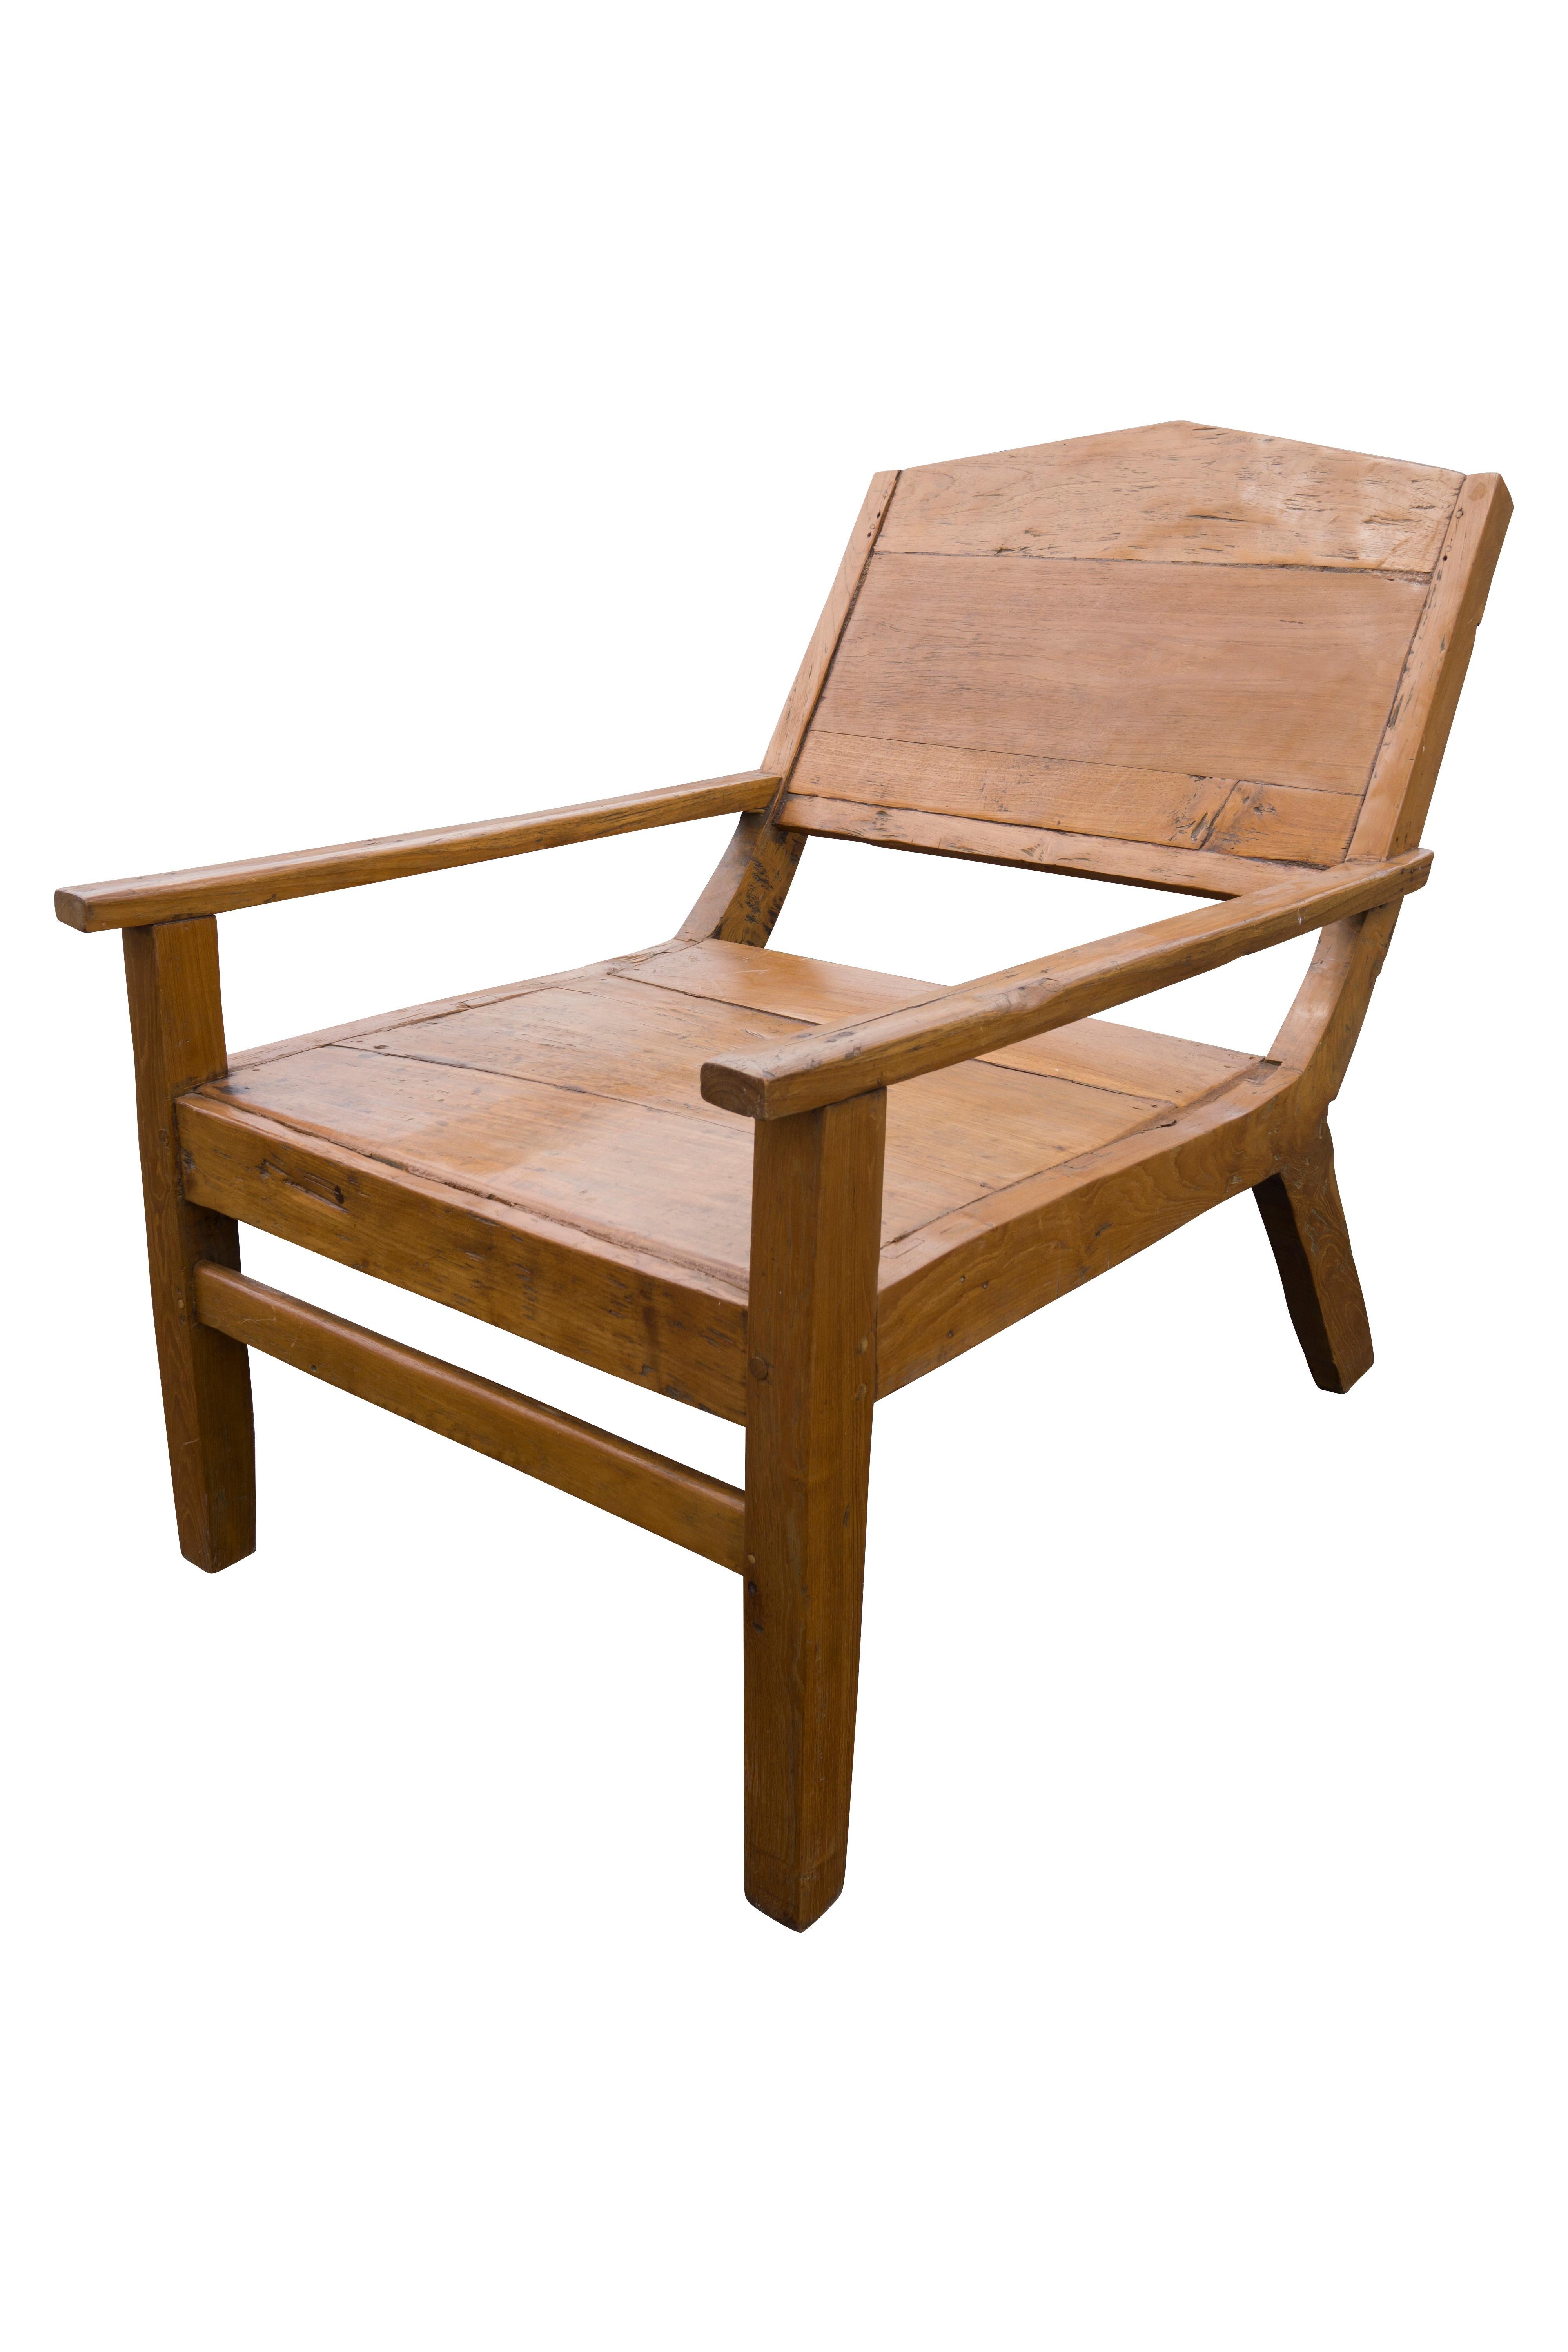 20th Century Scandinavian Mid Century Modern Lounge Chair